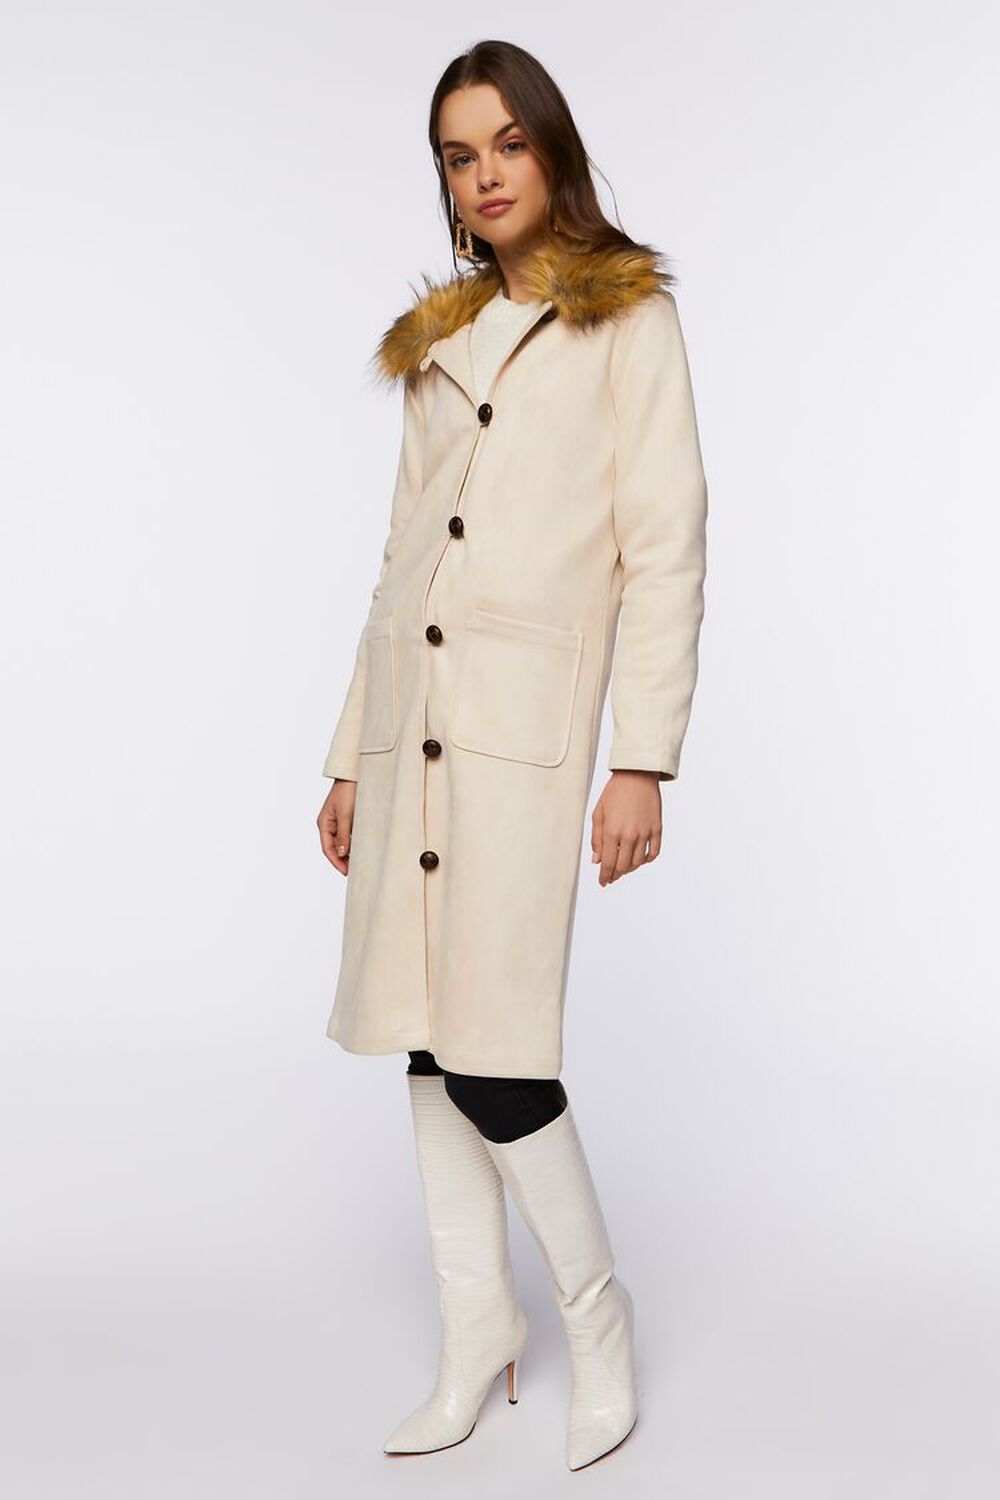 SAND/MULTI Faux Suede & Fur Longline Coat, image 2